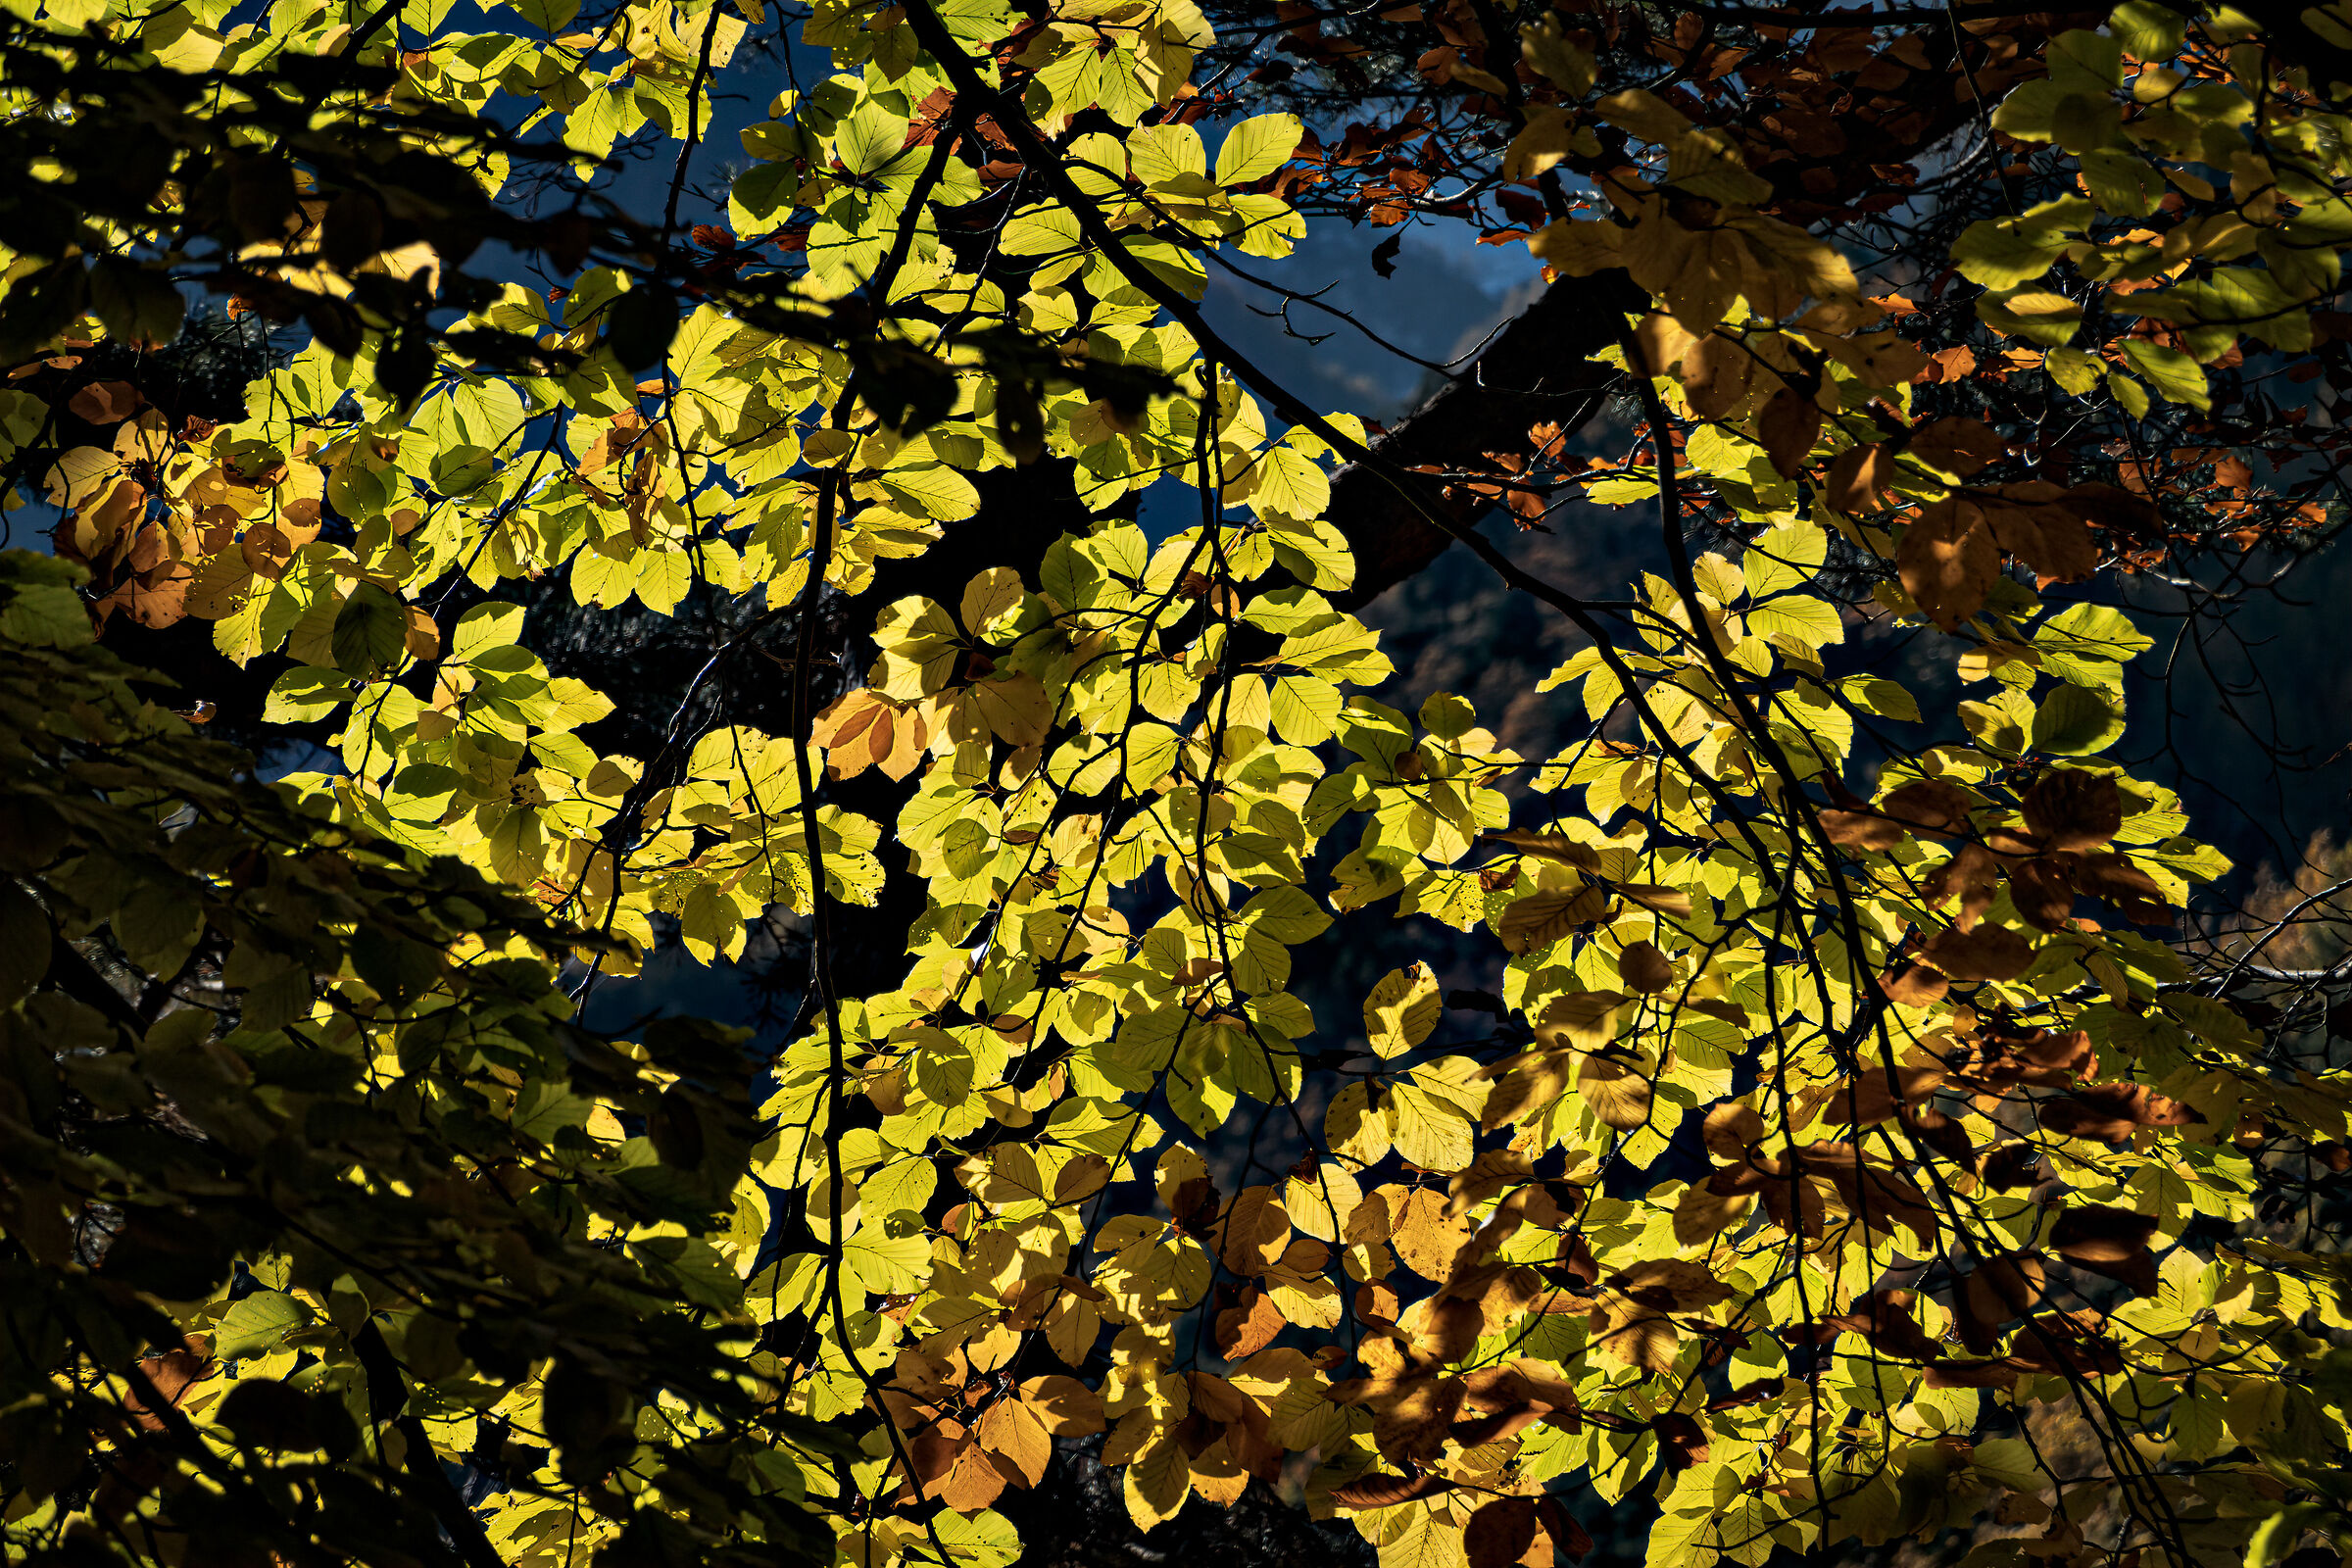 Beech leaves in autumn dress...